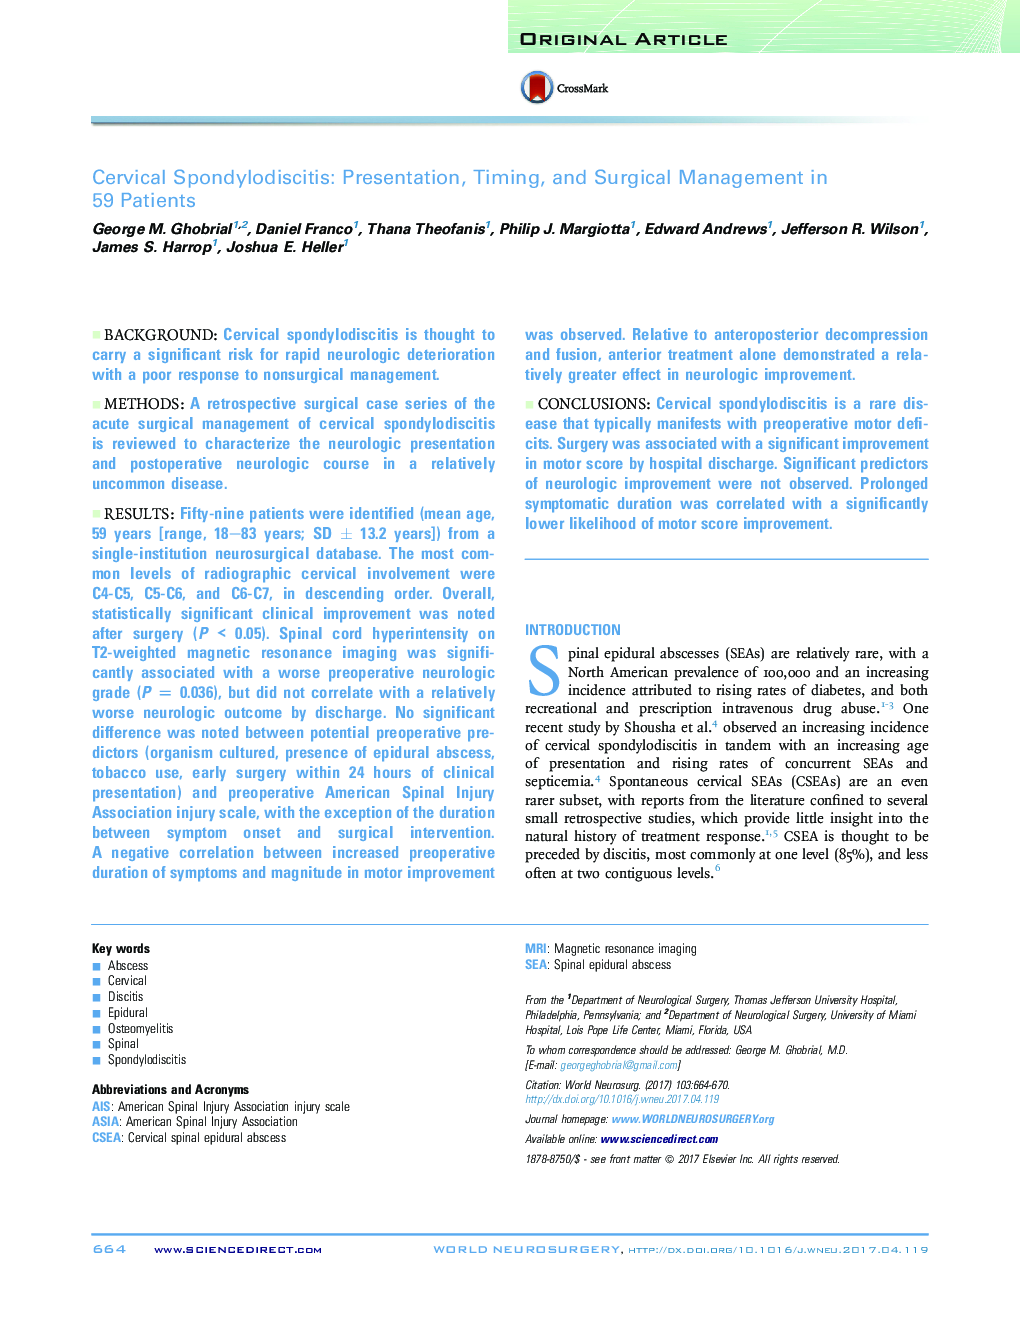 Cervical Spondylodiscitis: Presentation, Timing, and Surgical Management in 59 Patients